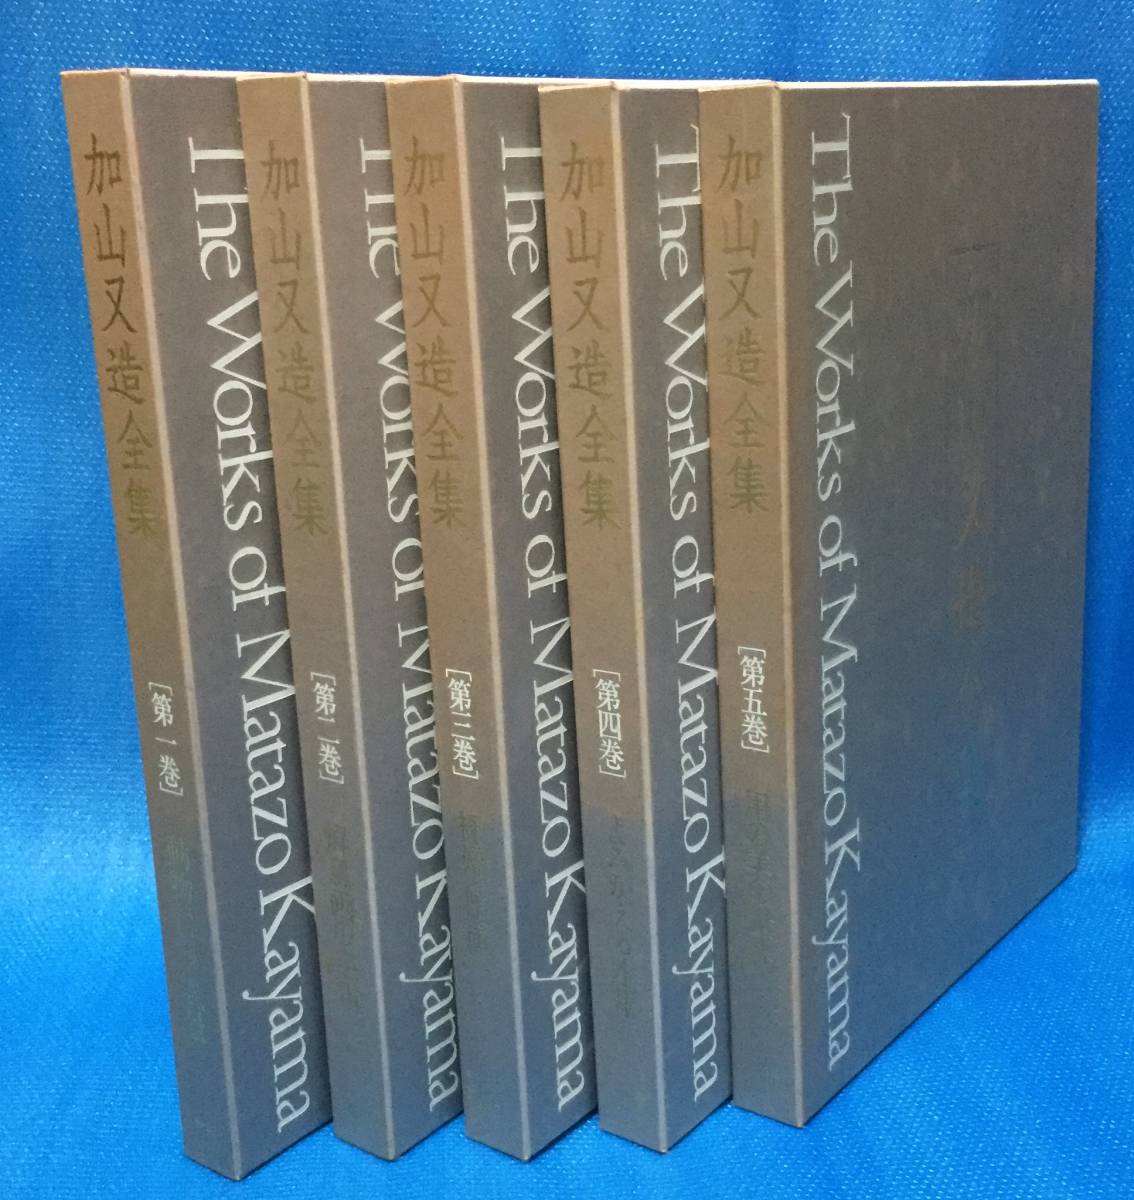 加山又造全集・全５巻 学習研究社 1990年4月第1巻発行から全5巻セット